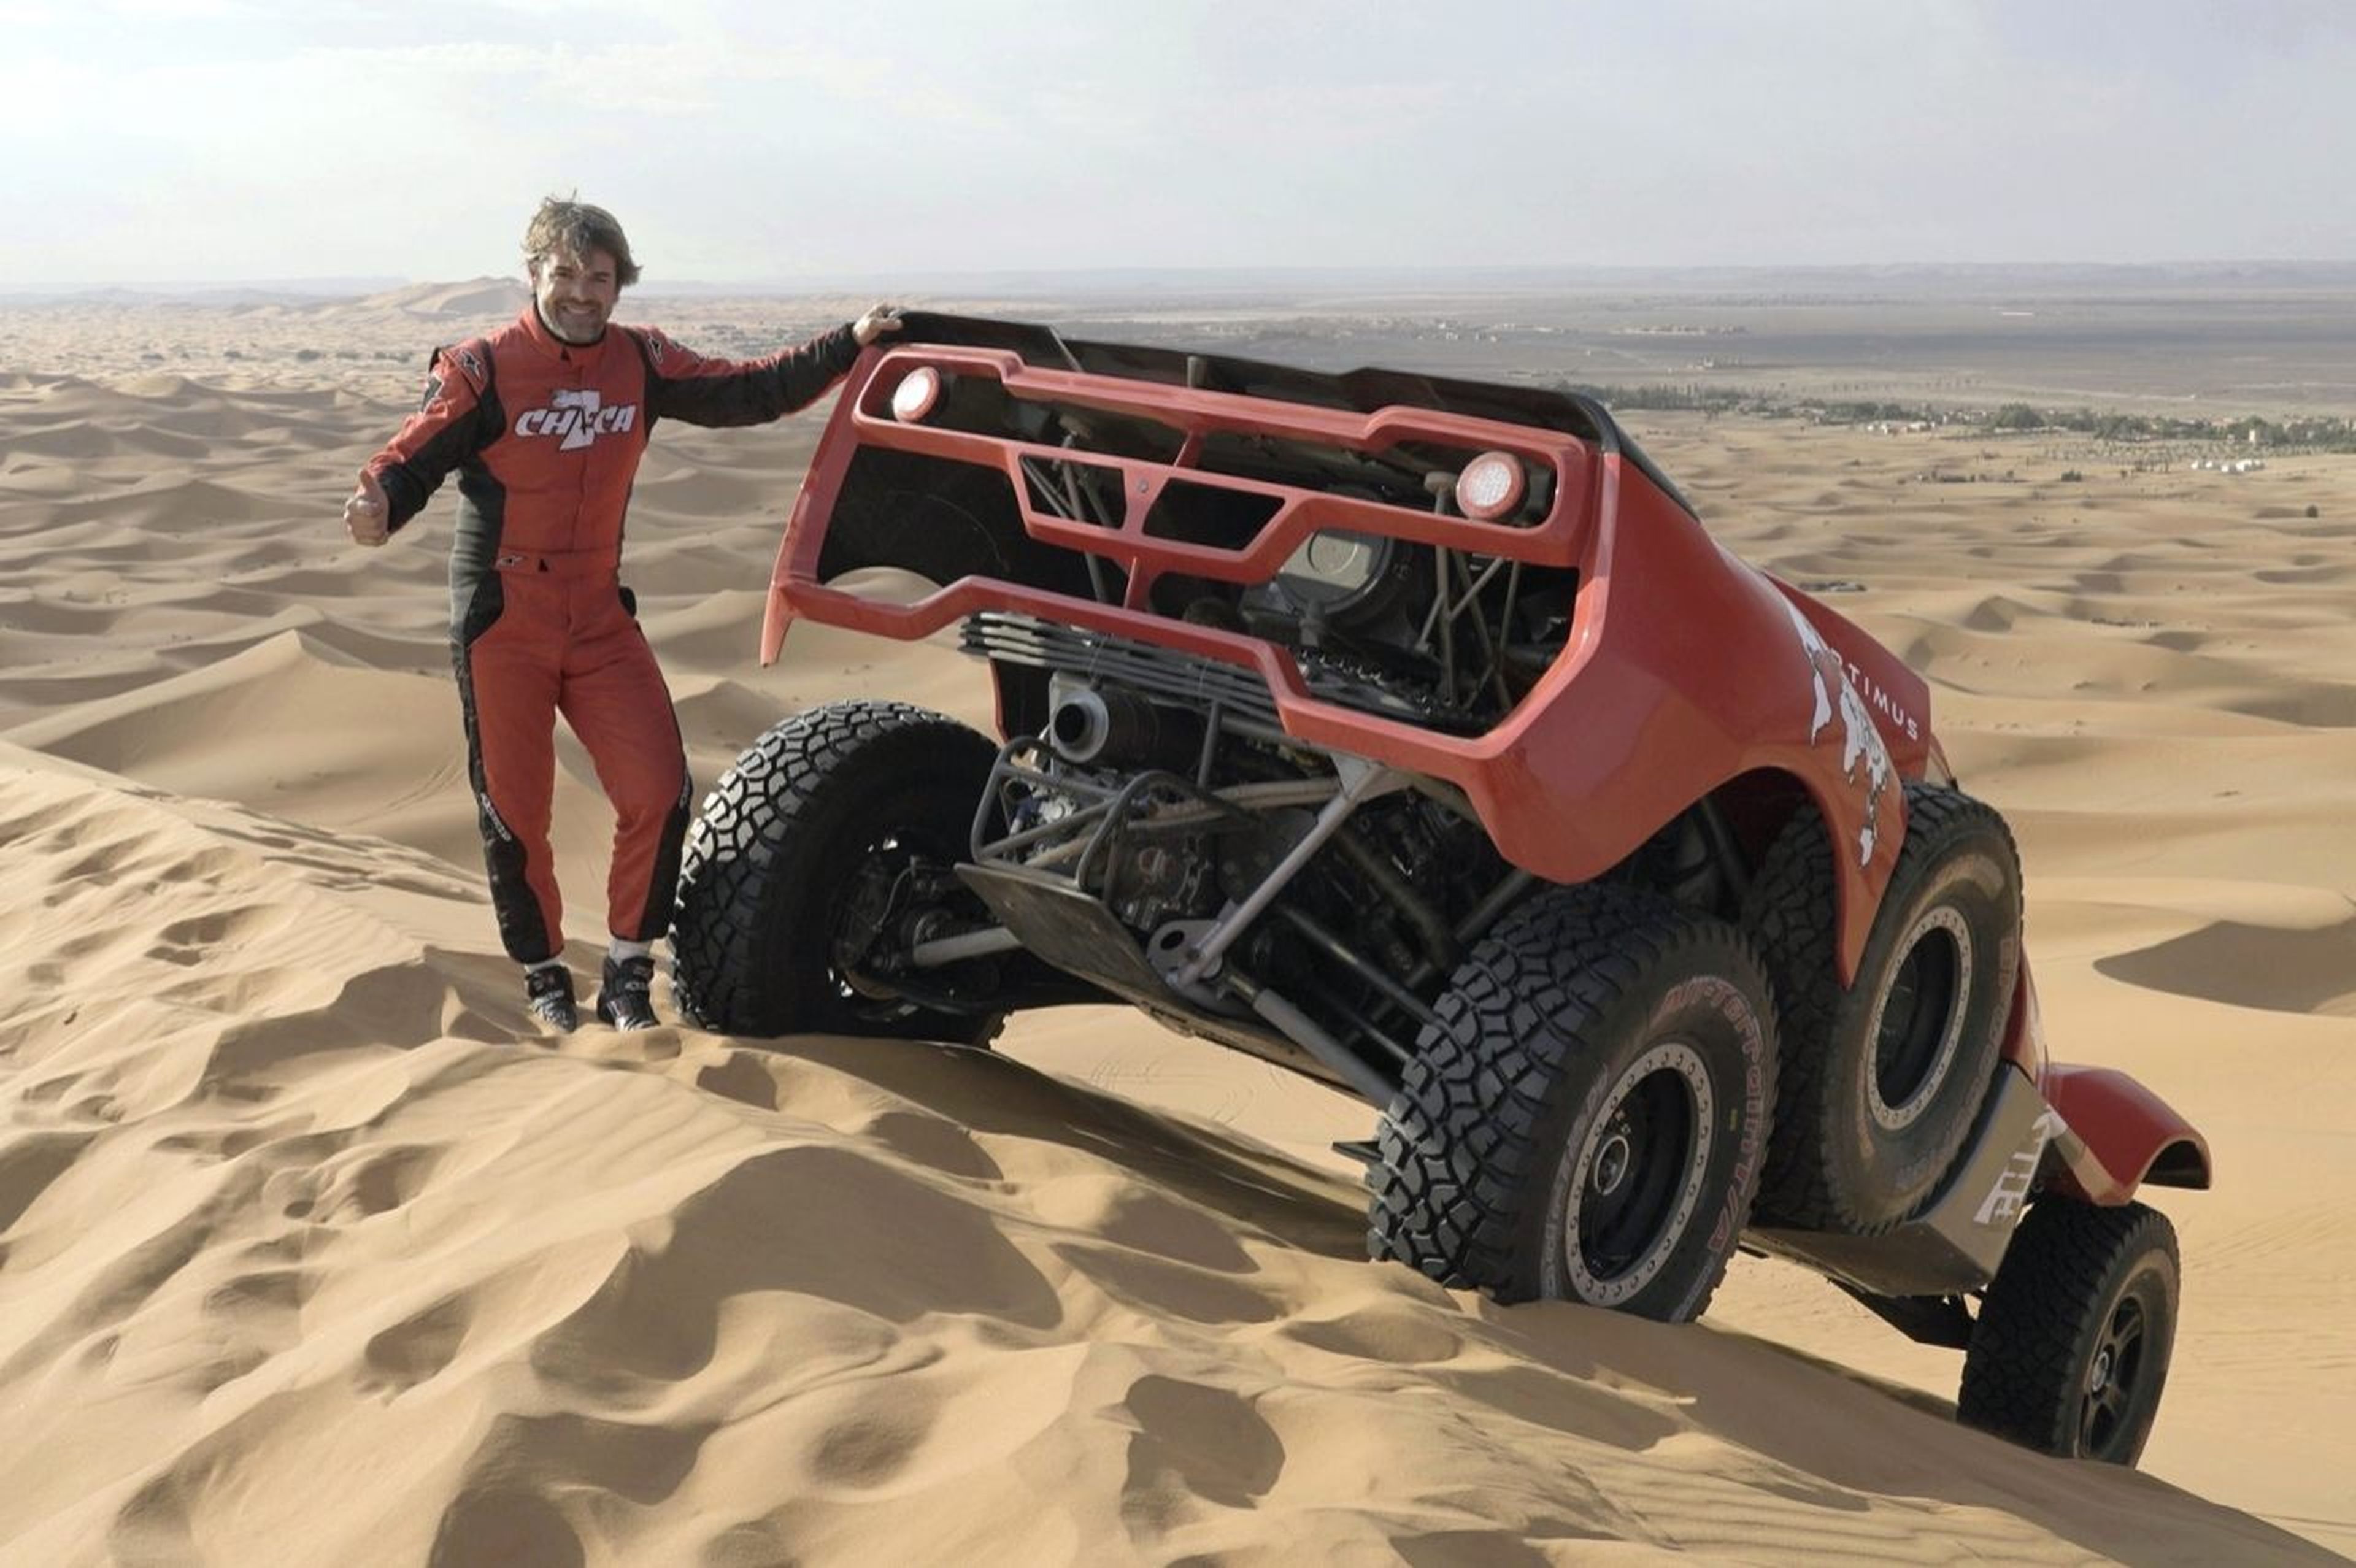 Carlos Checa Dakar 2022